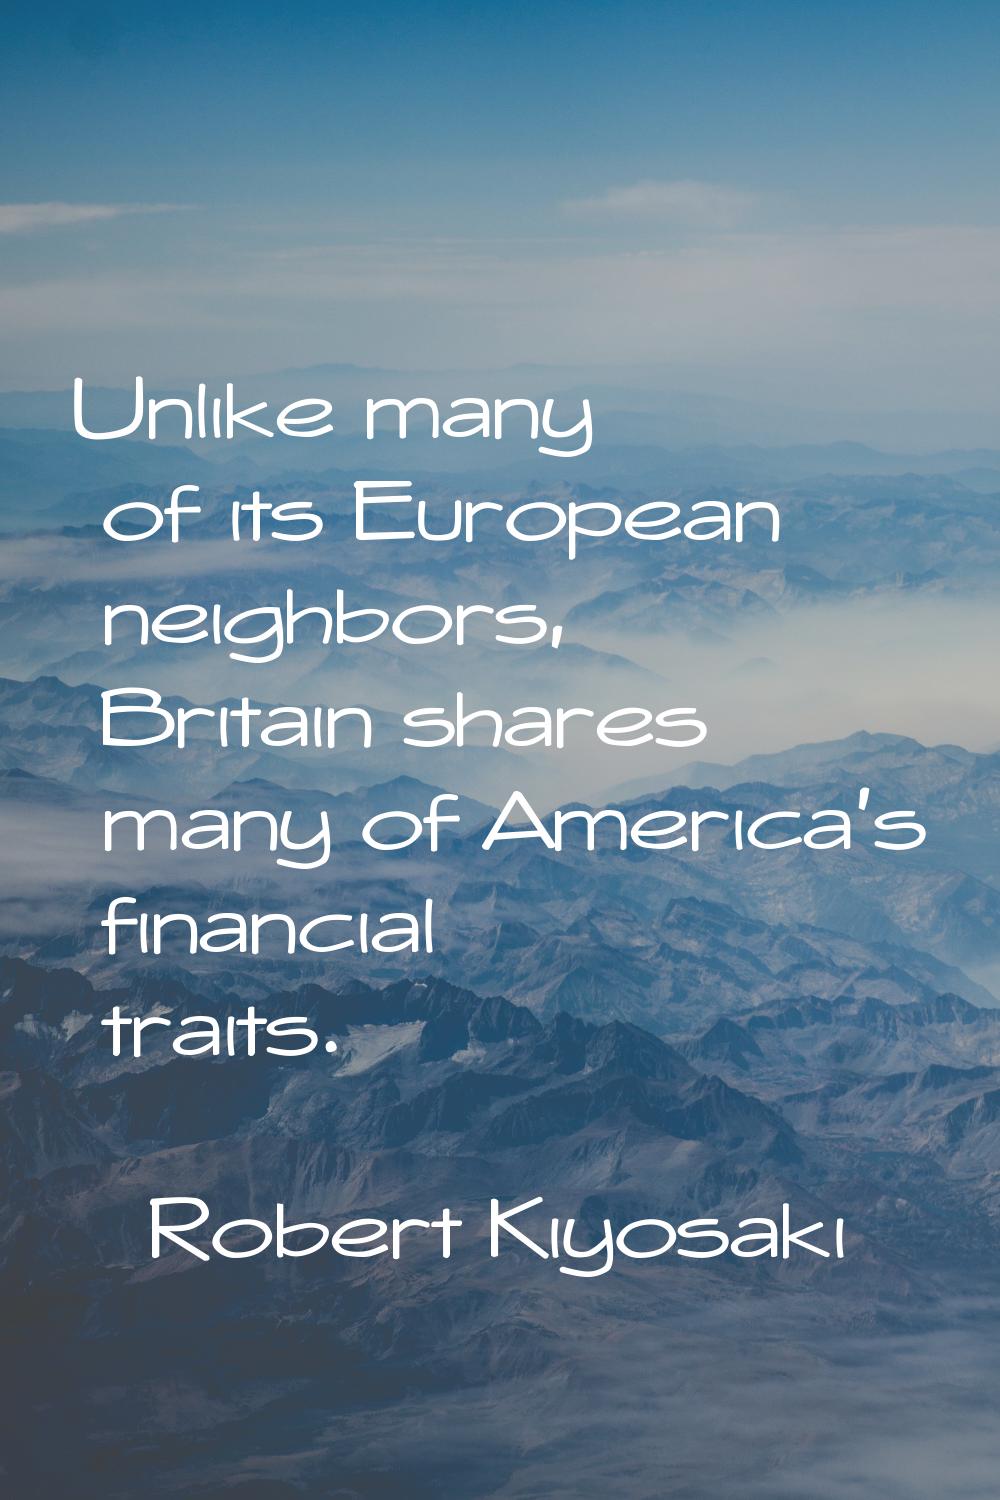 Unlike many of its European neighbors, Britain shares many of America's financial traits.